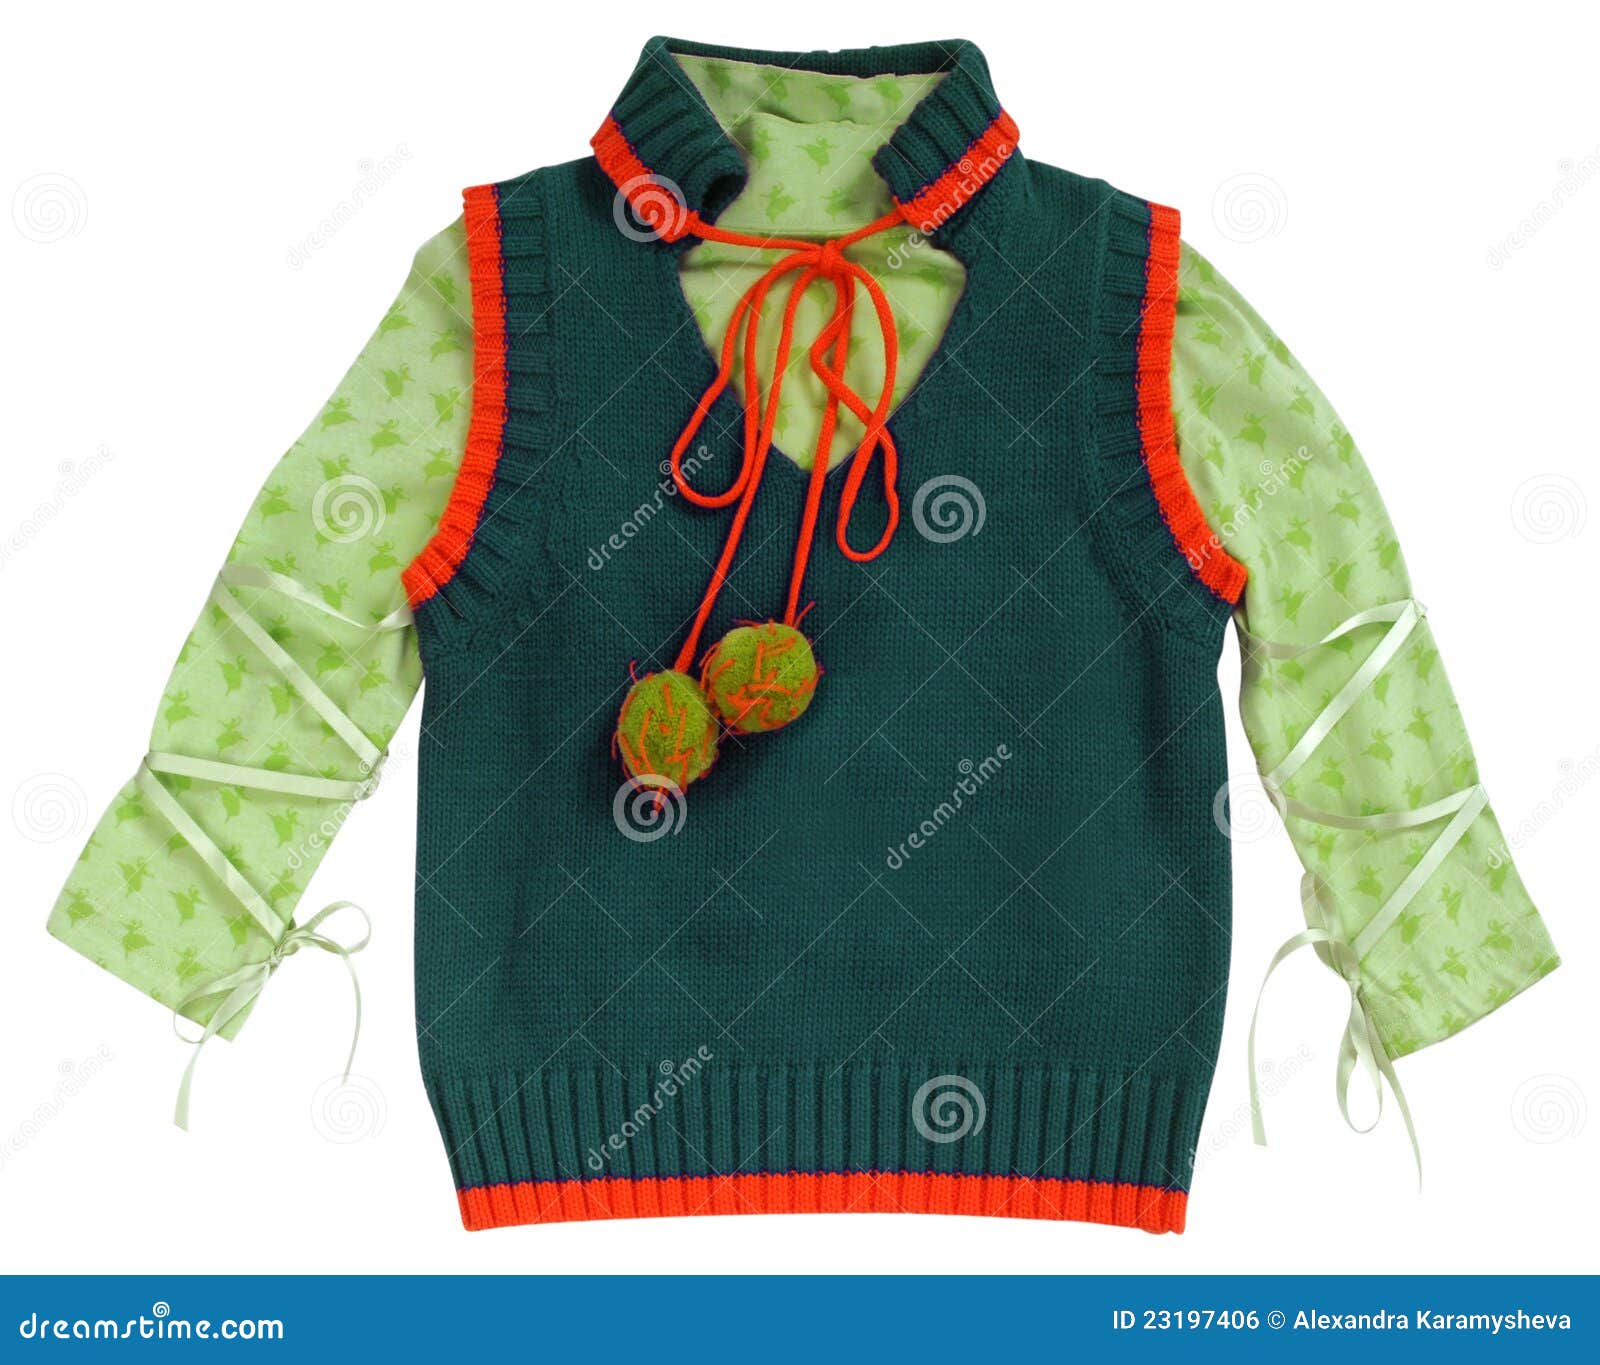 Green jacket stock photo. Image of diverse, design, jacket - 23197406